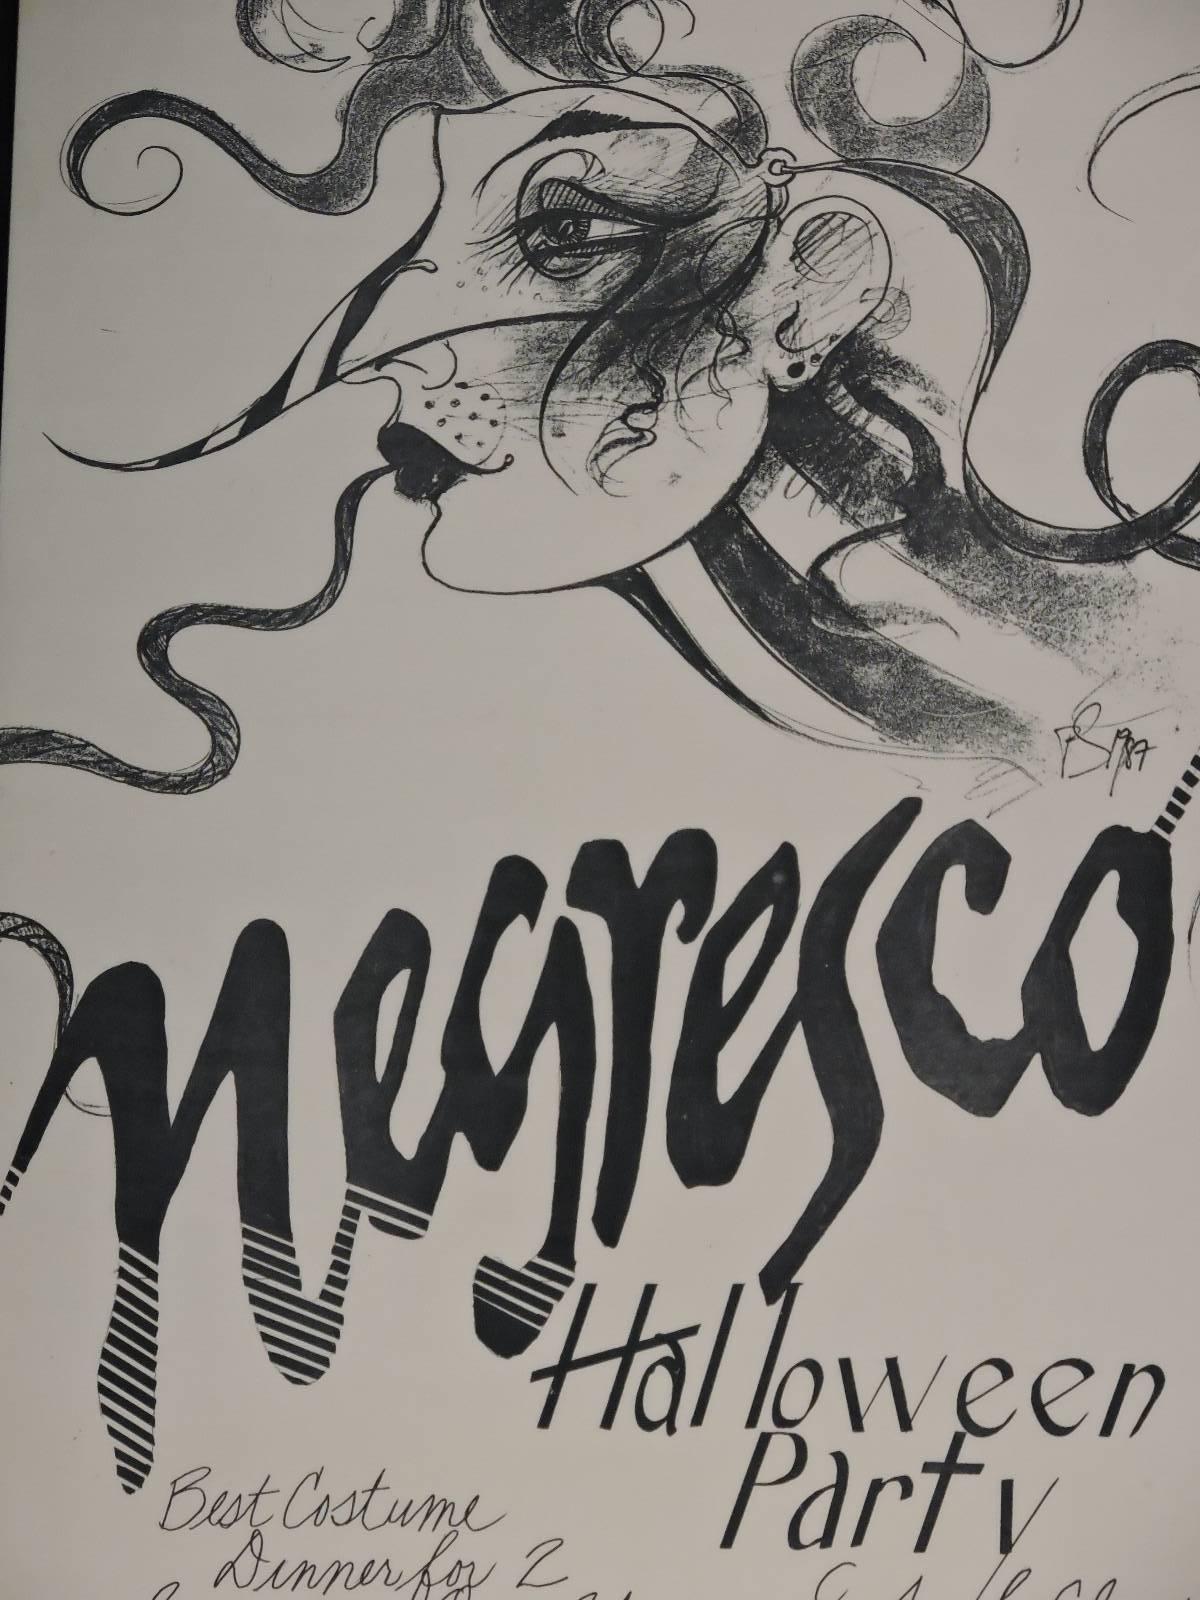 Late 20th Century Negresco Halloween Party Poster by Ramon Santiago, 1987